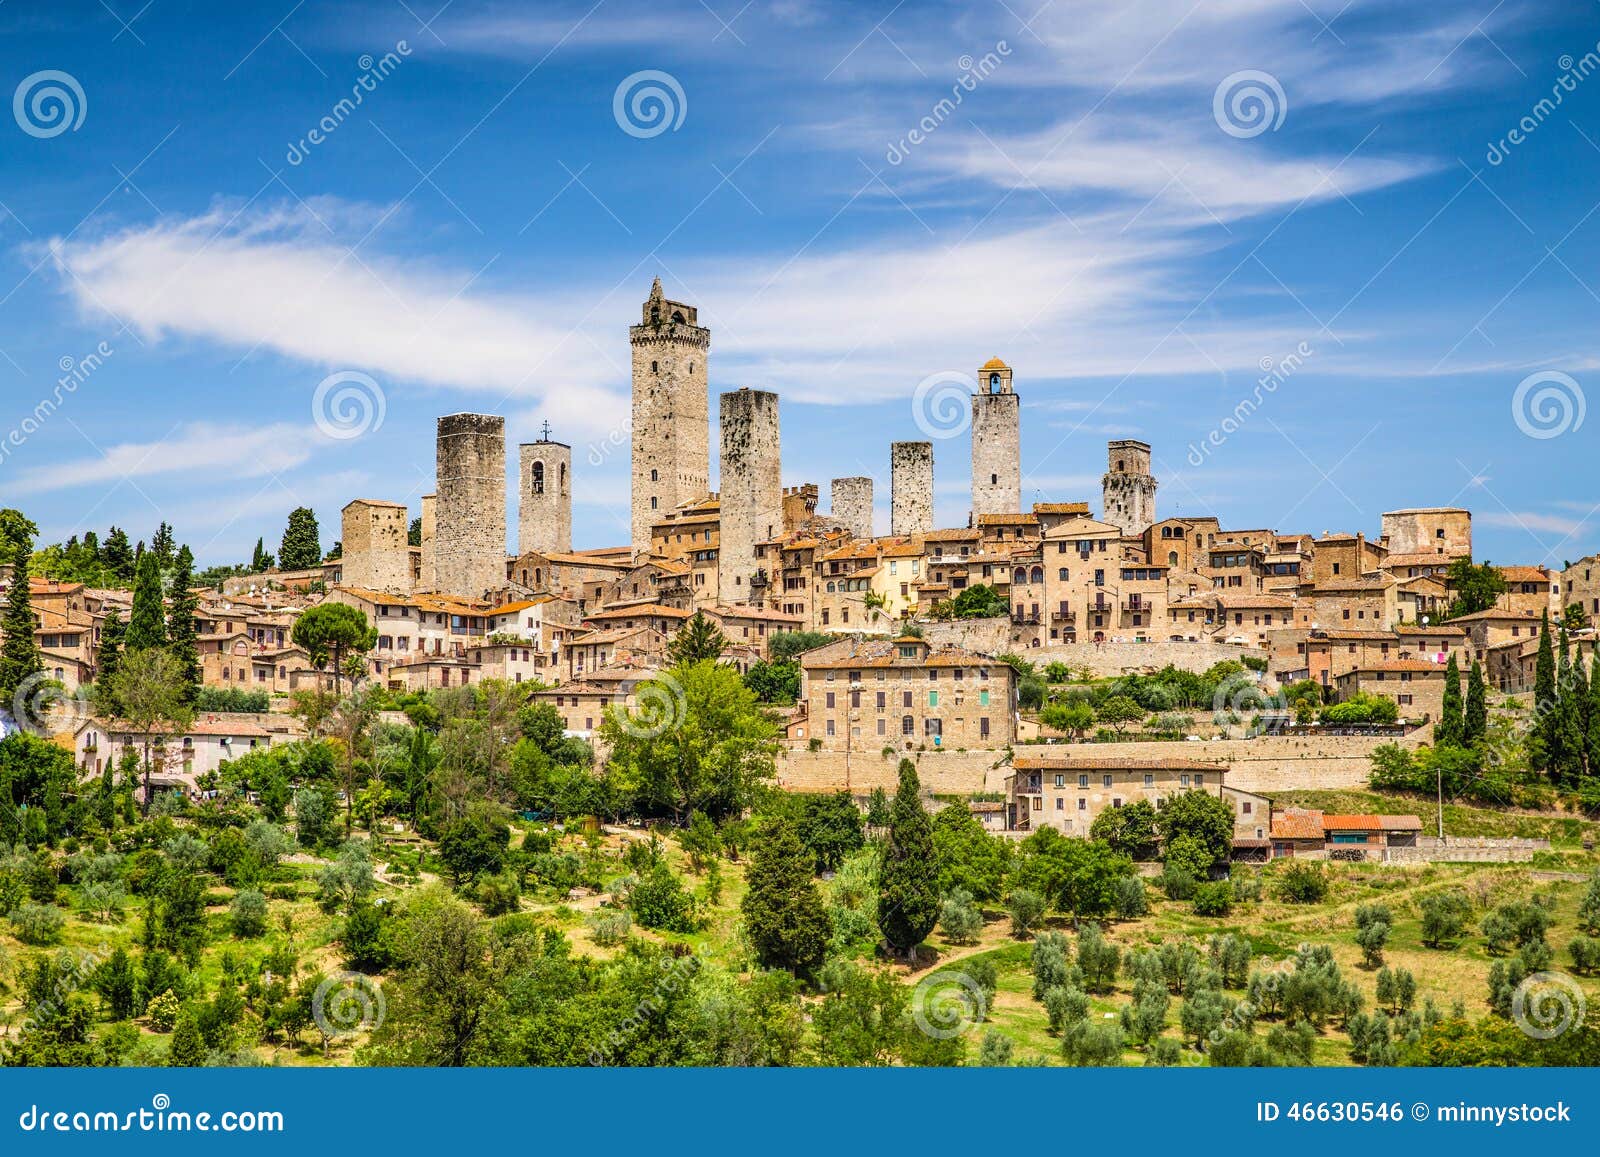 medieval town of san gimignano, tuscany, italy